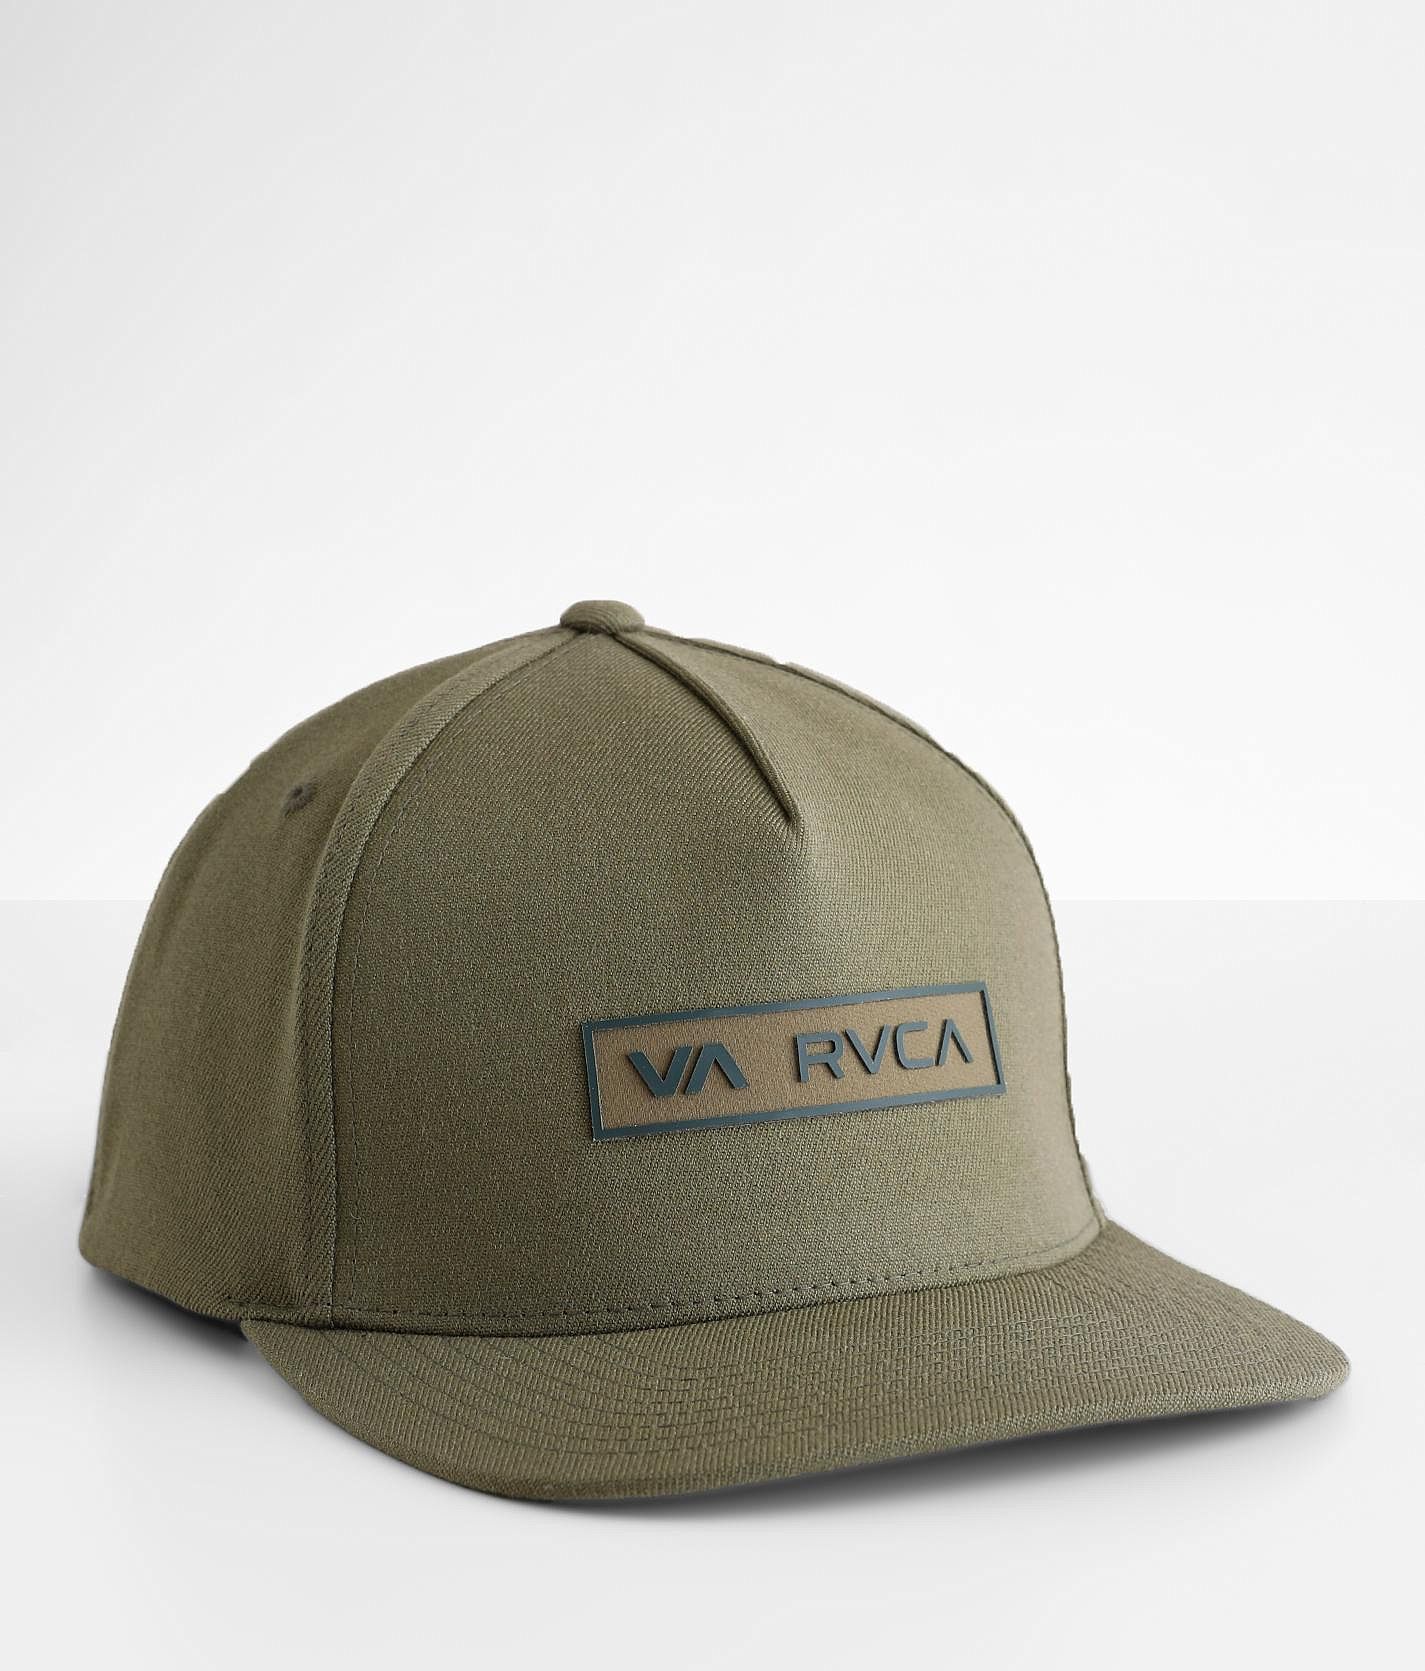 RVCA Stadium 110 Flexfit Hat - Men's Hats in Olive | Buckle